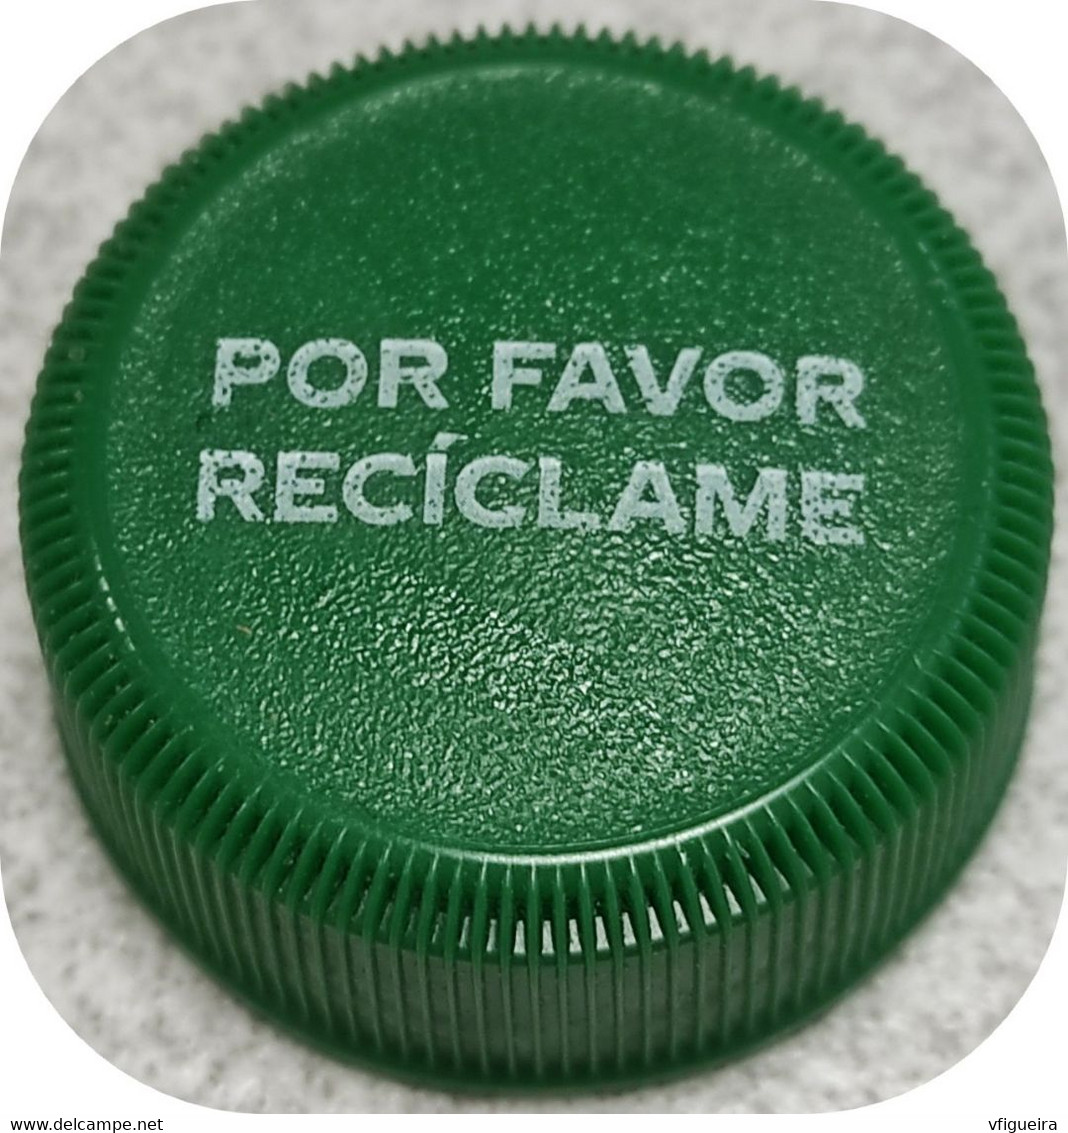 Espagne Capsule Plastique à Visser Verte Por Favor Recíclame SU - Limonade